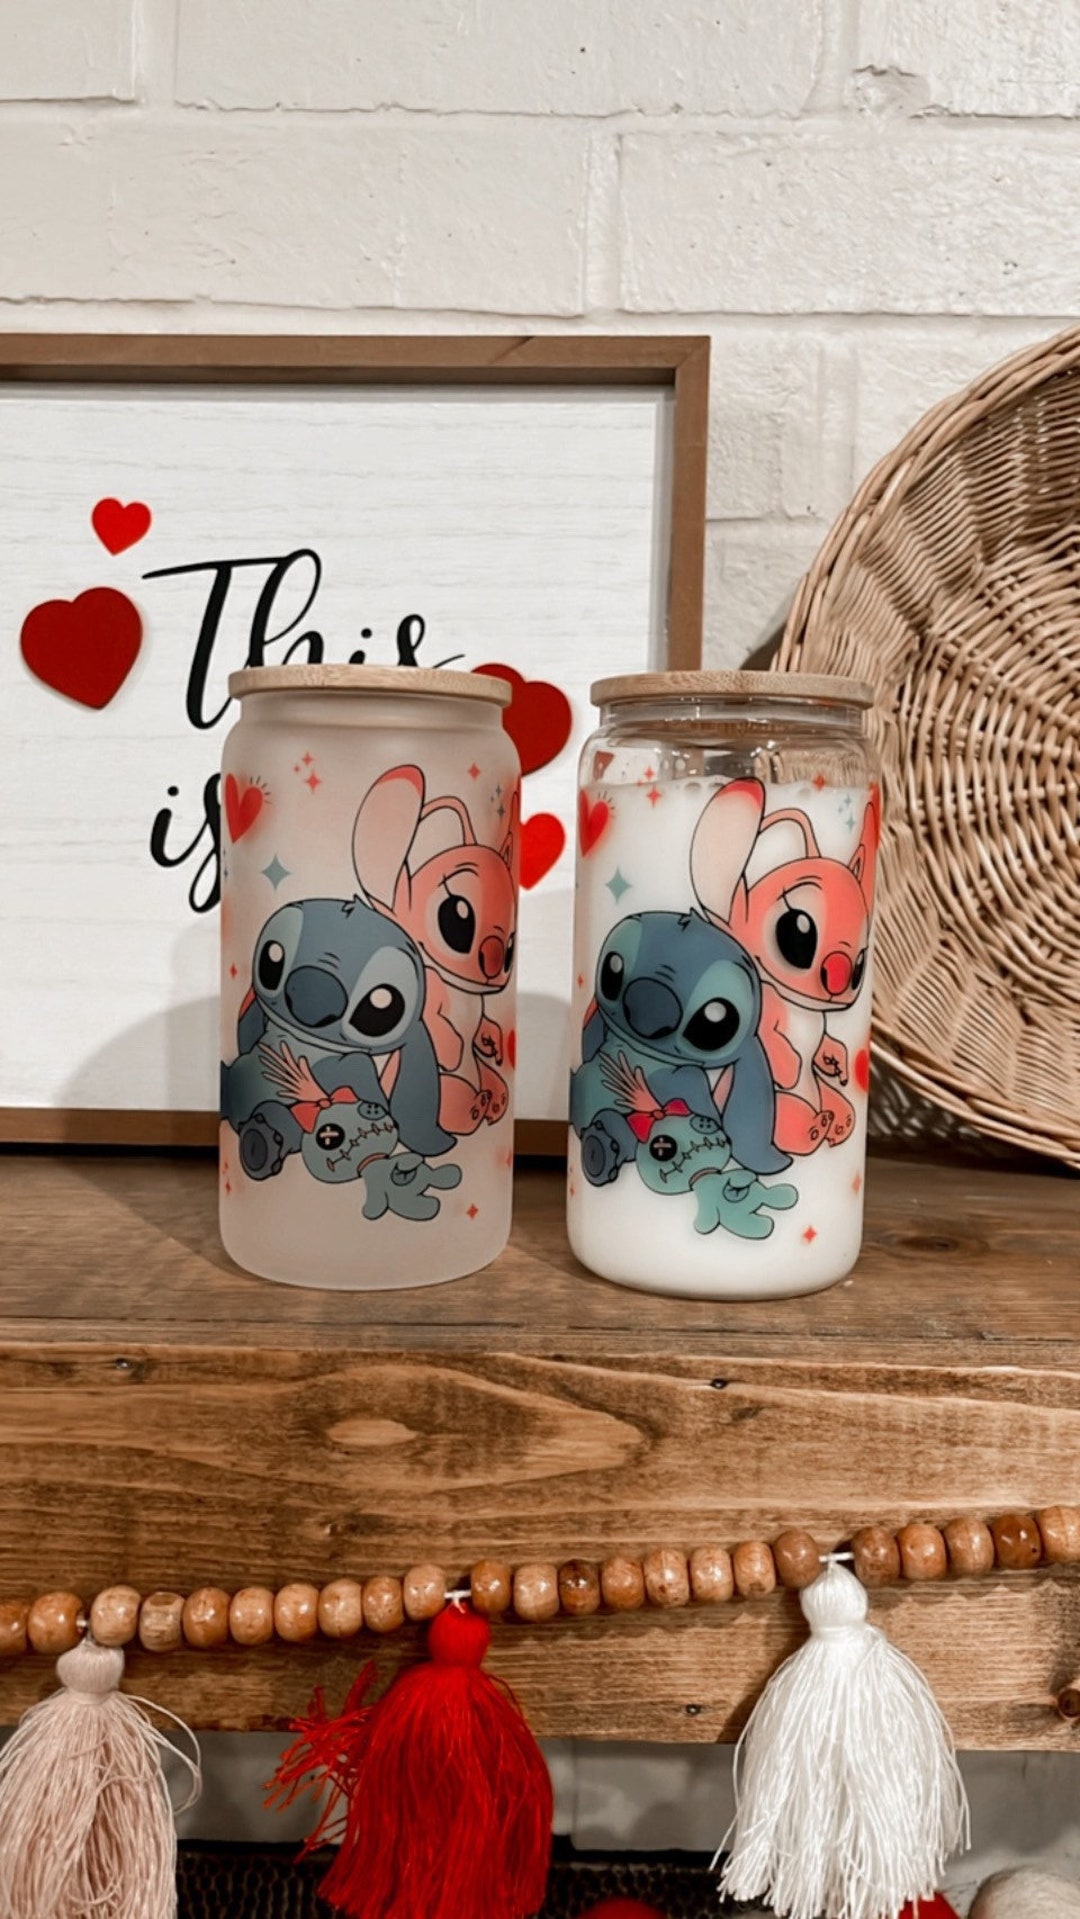 Mug Lilo & Stitch Disney - You're my Fave sur Rapid Cadeau